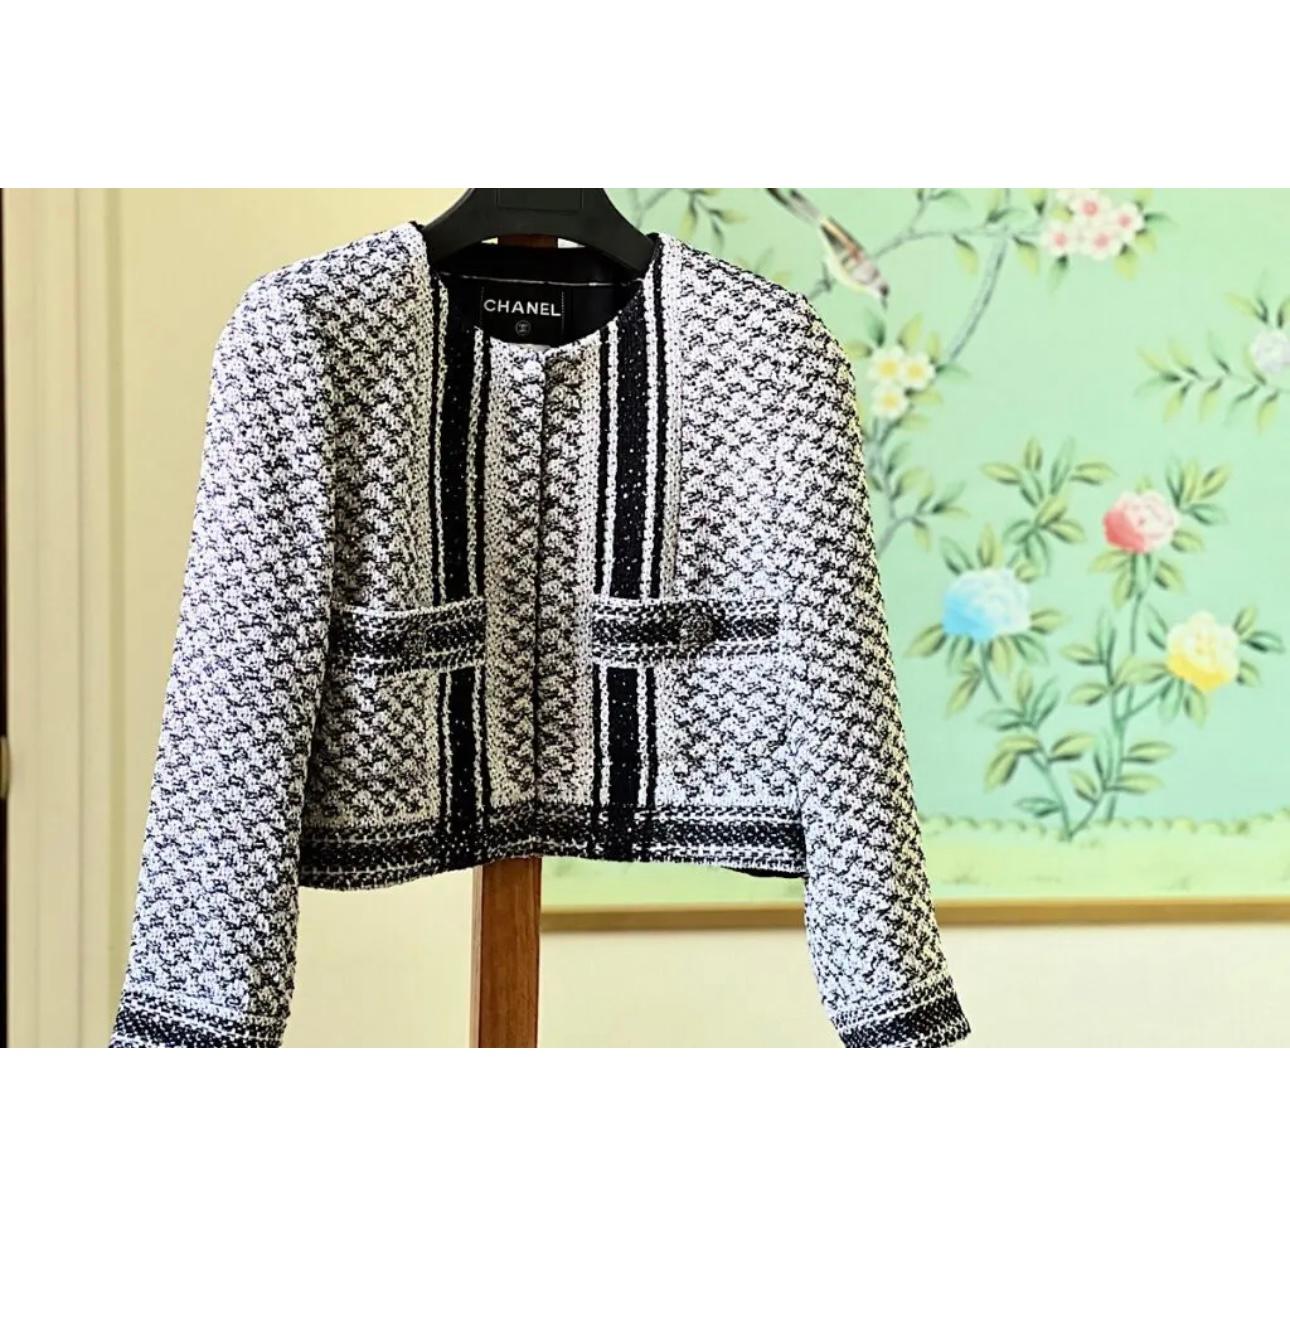 Chanel New Gigi Hadid Style Lesage Tweed Jacket For Sale 7